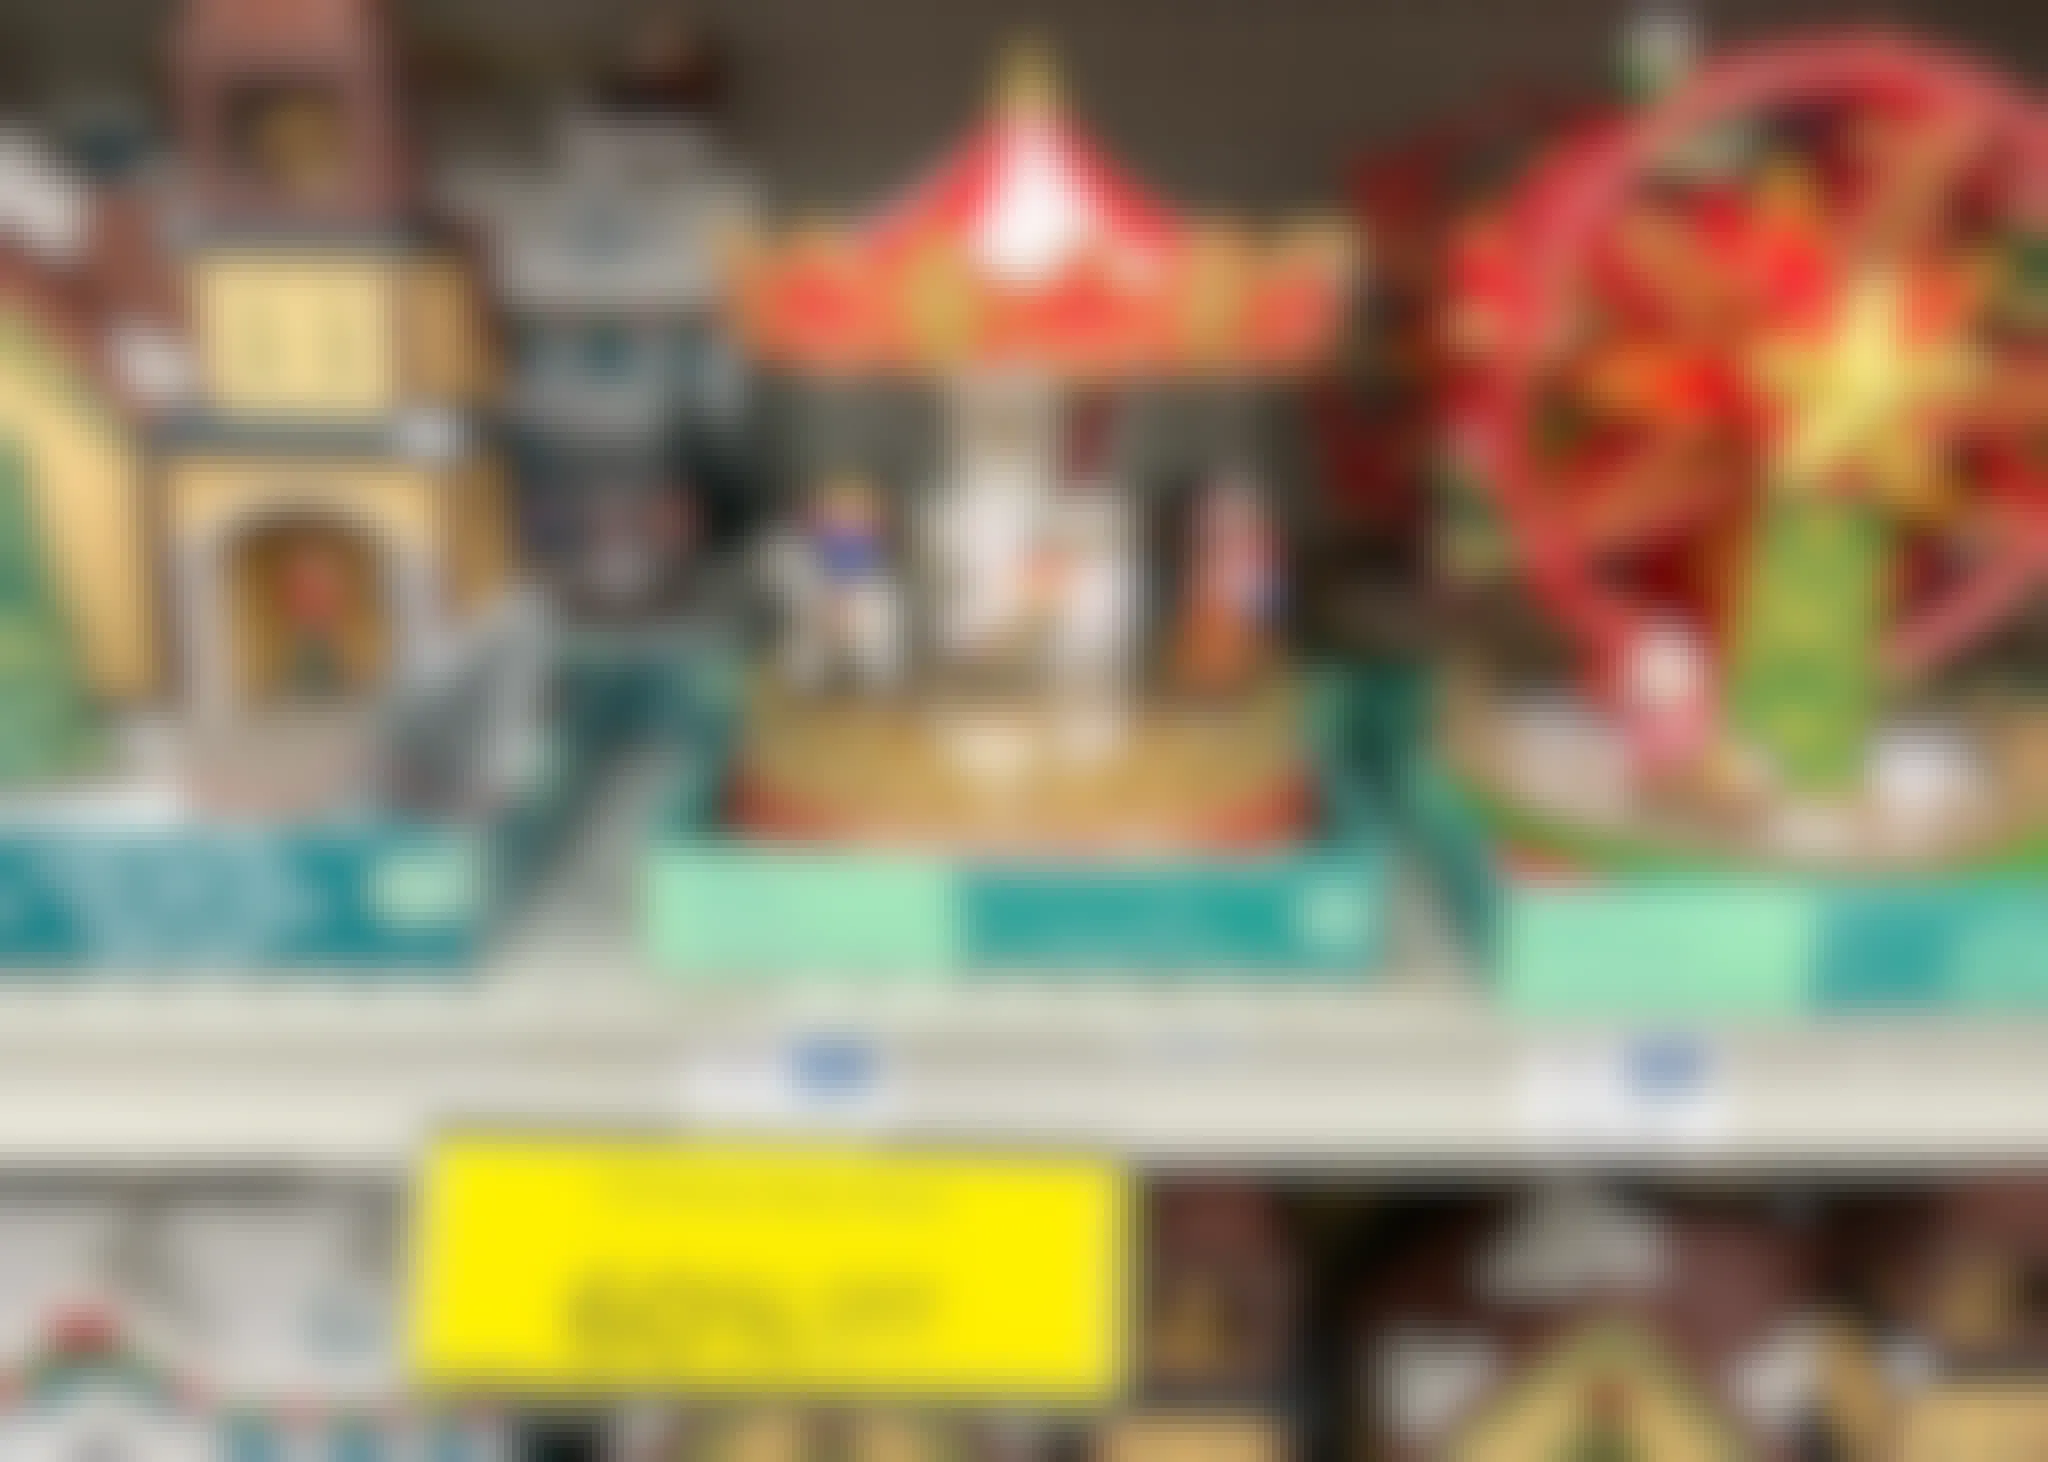 christmas carousel on shelf above sale tag